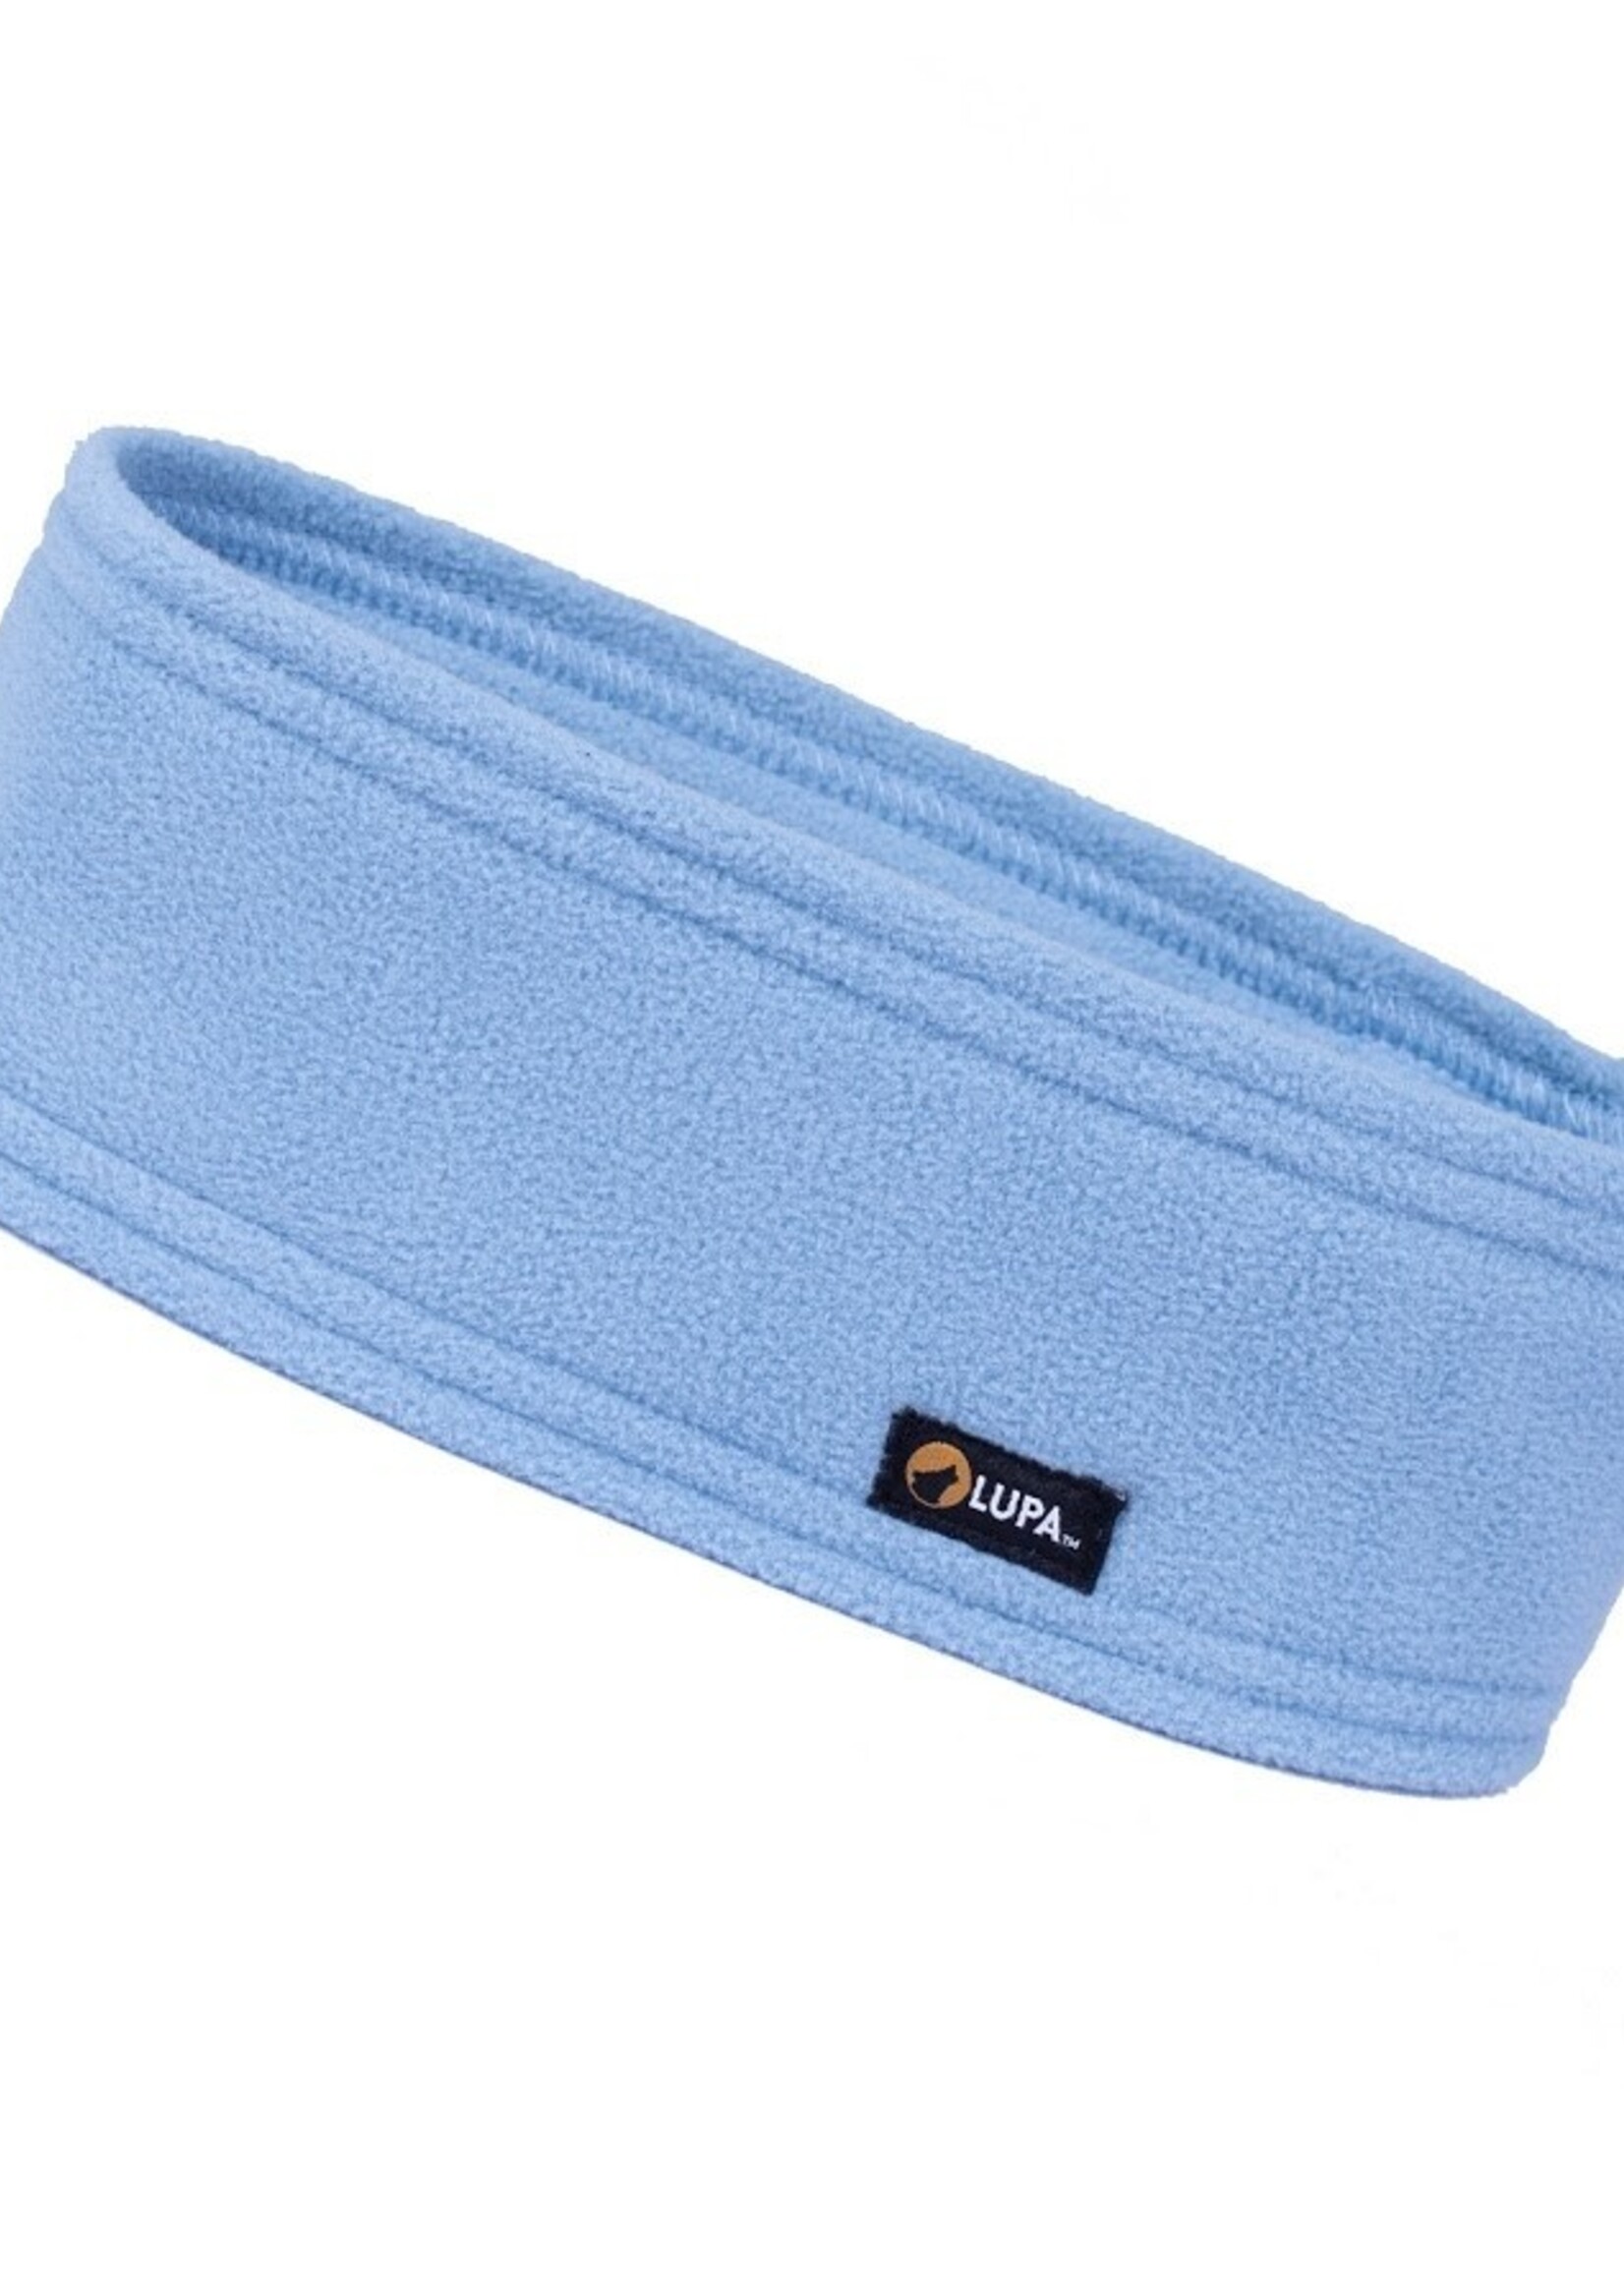 Lupa Bandeau d'hiver Adulte Polaire | Adult Micro Fleece Headband